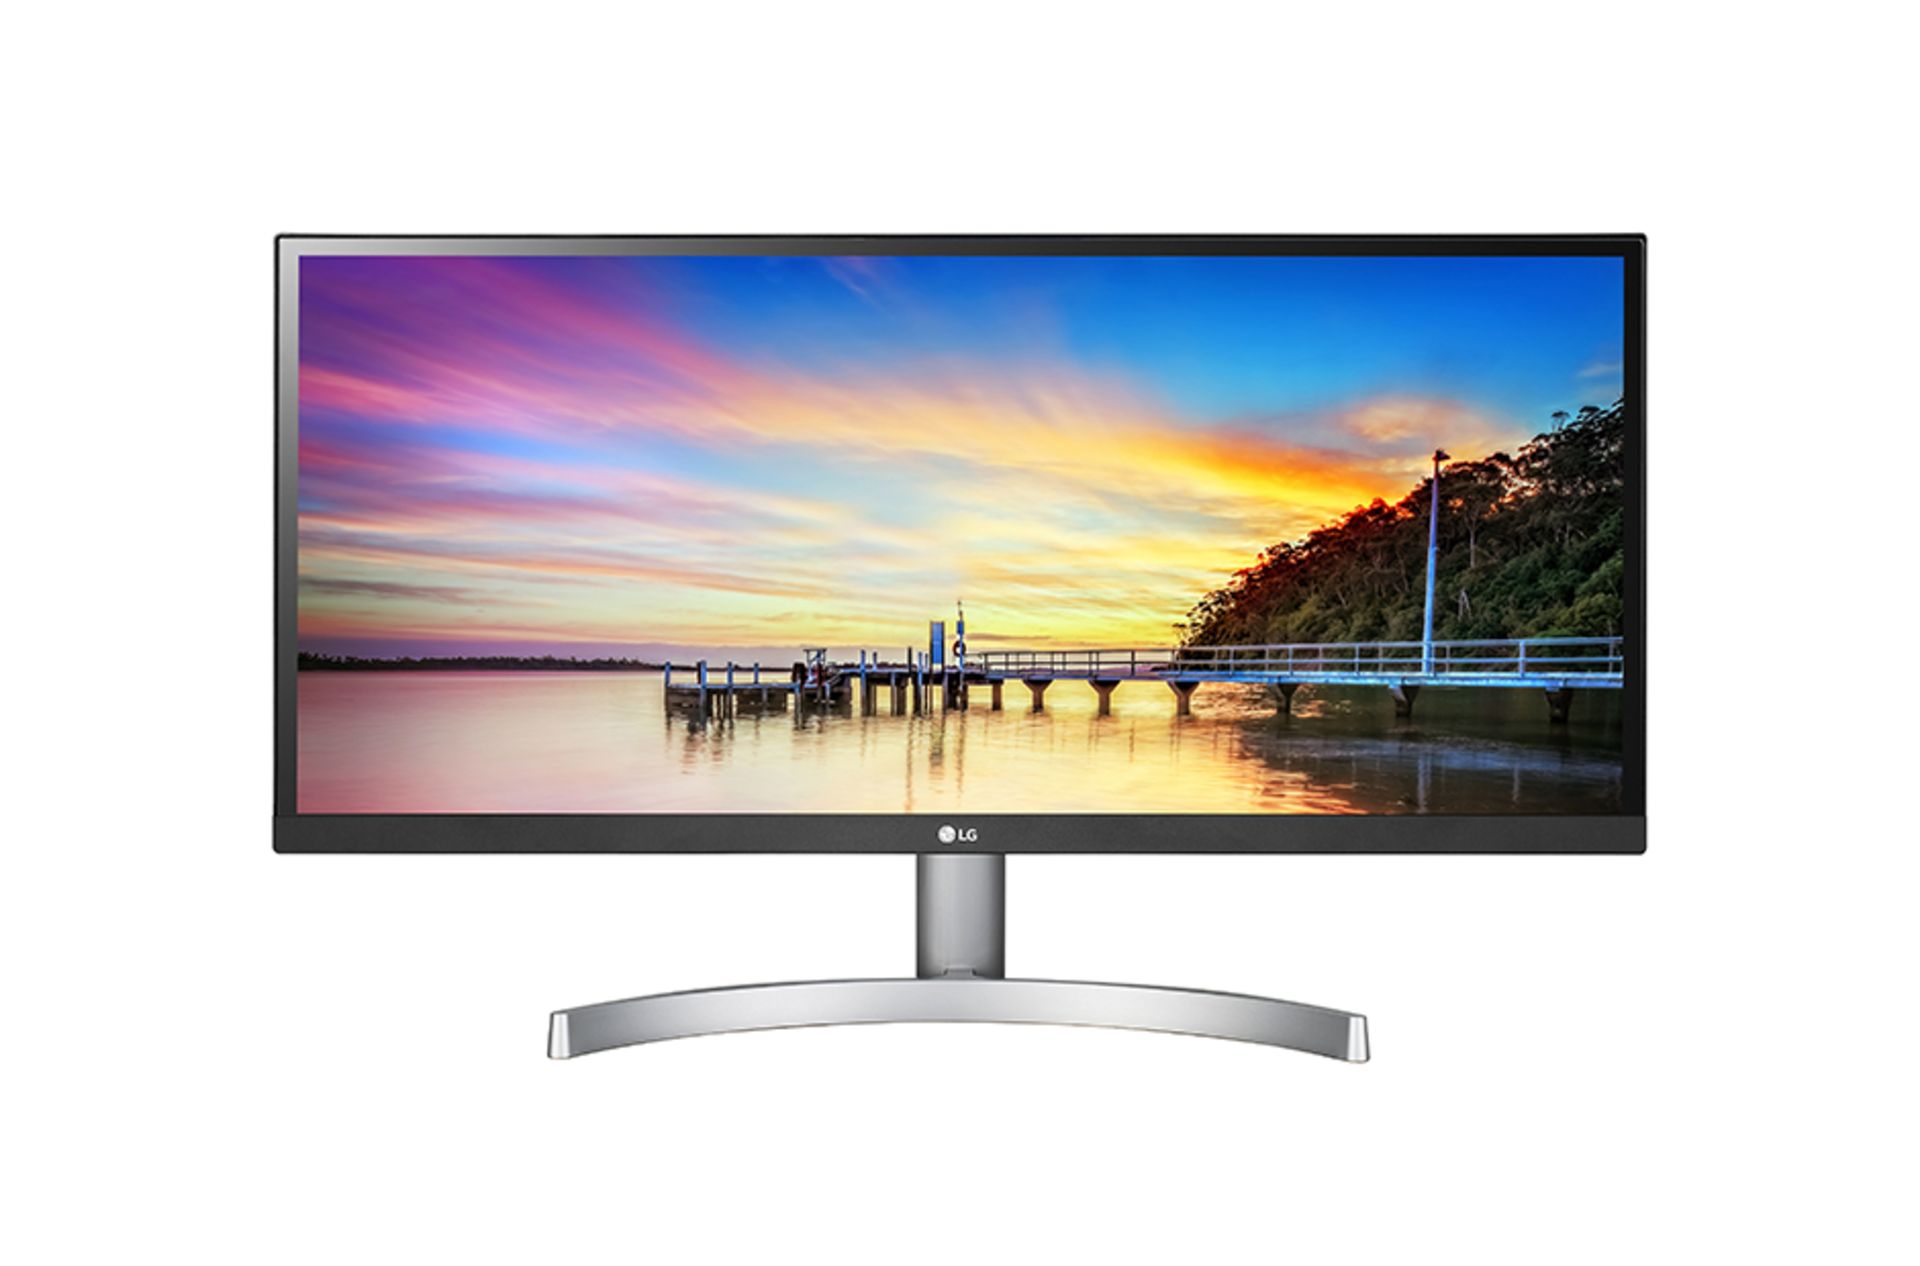 LG model 29WK600-W 29" LED back lit LCD monitor white & silver Jan 2018 - Image 2 of 3